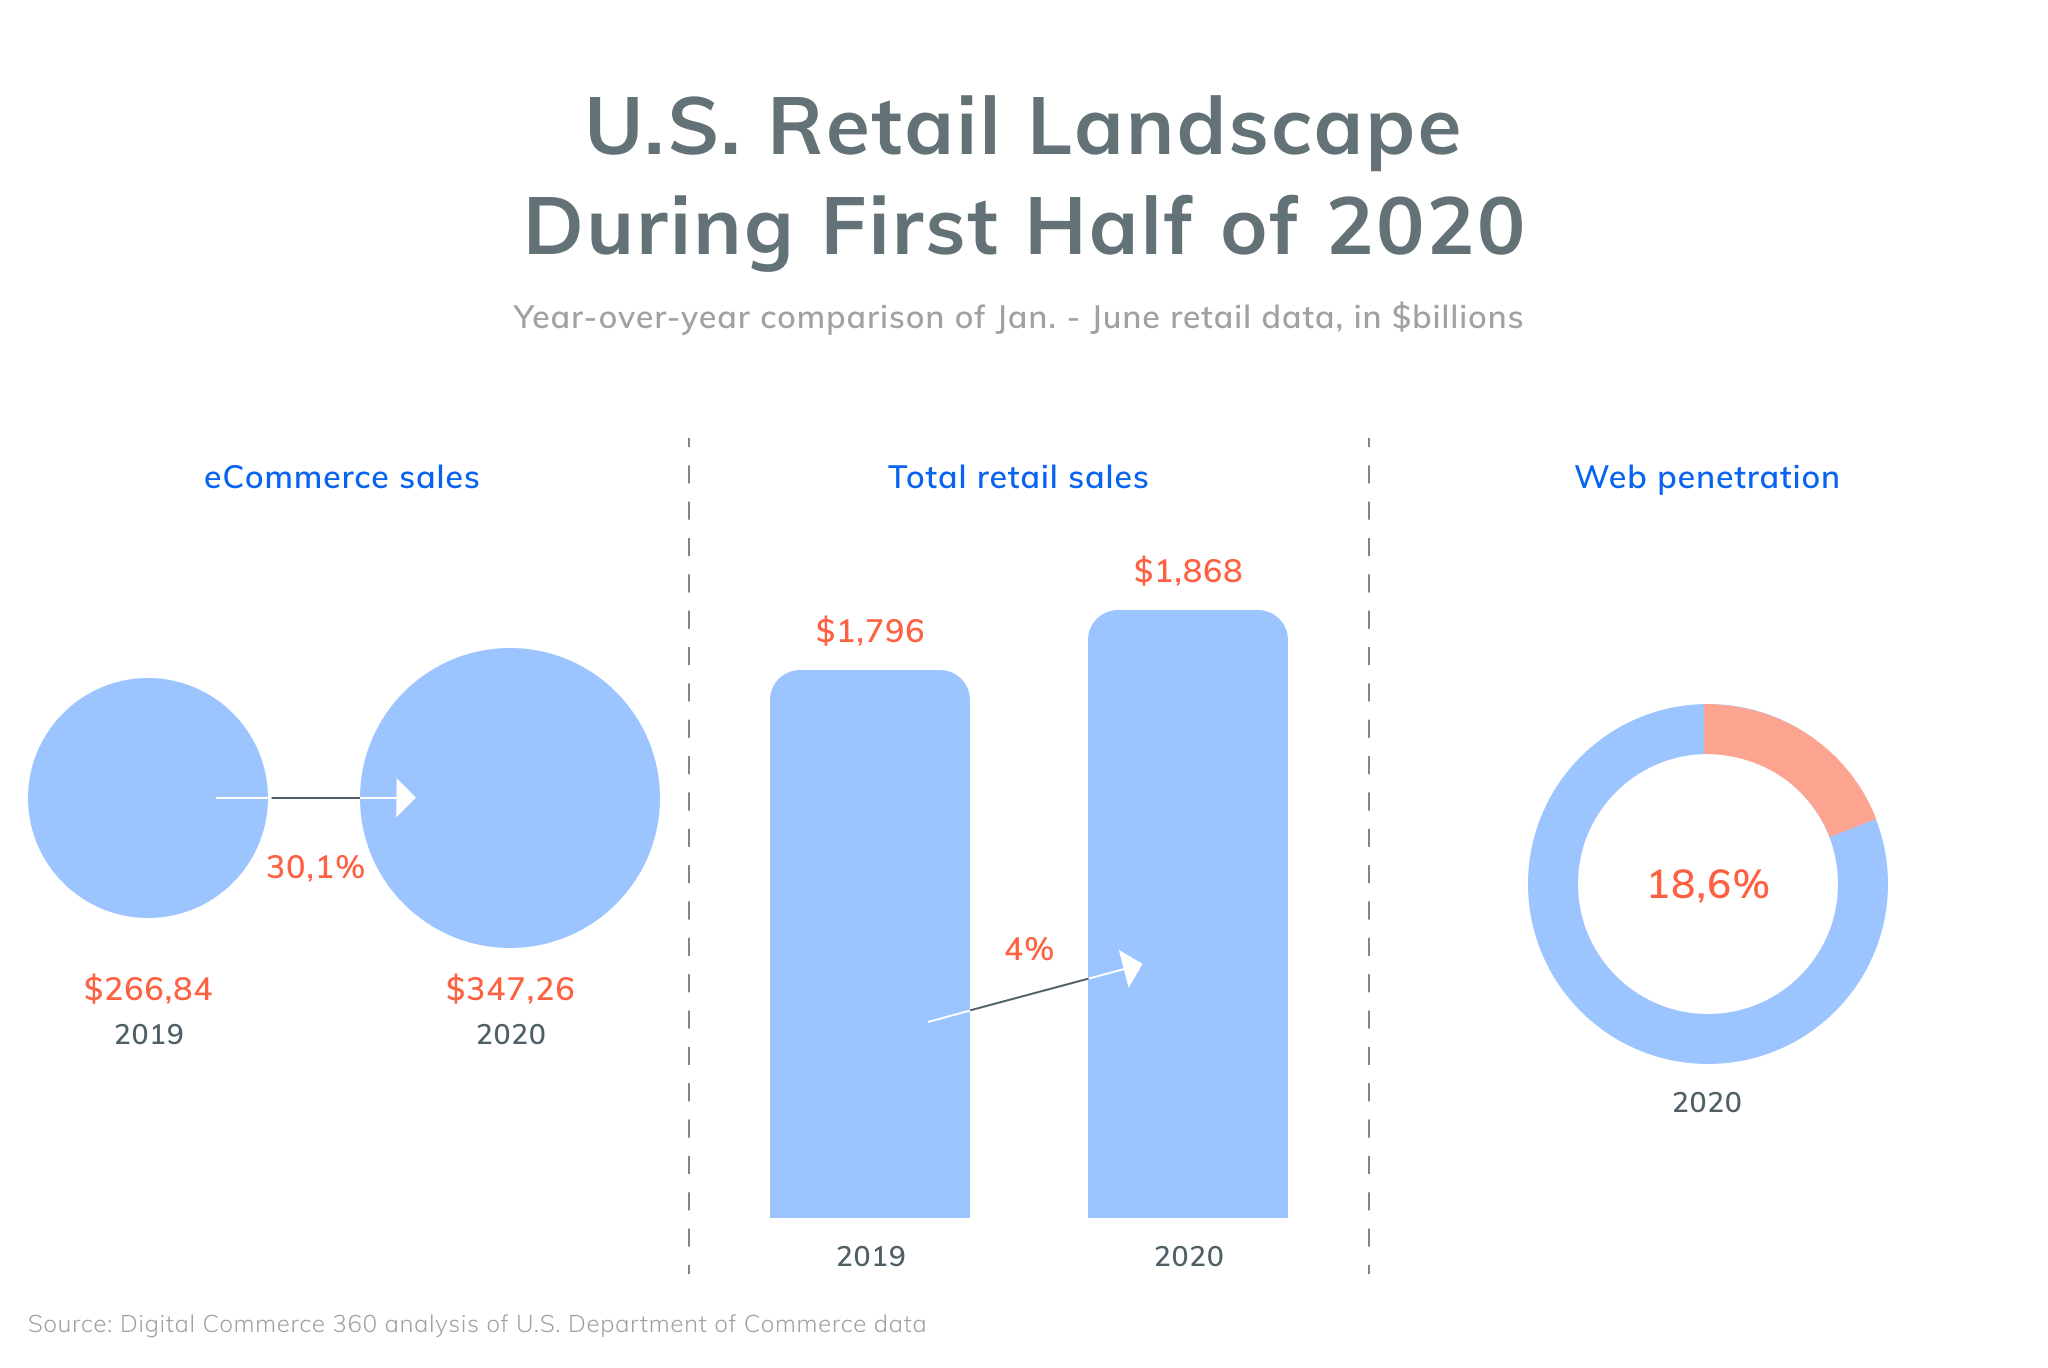  U.S. Retail Landscape During First Half of 2020